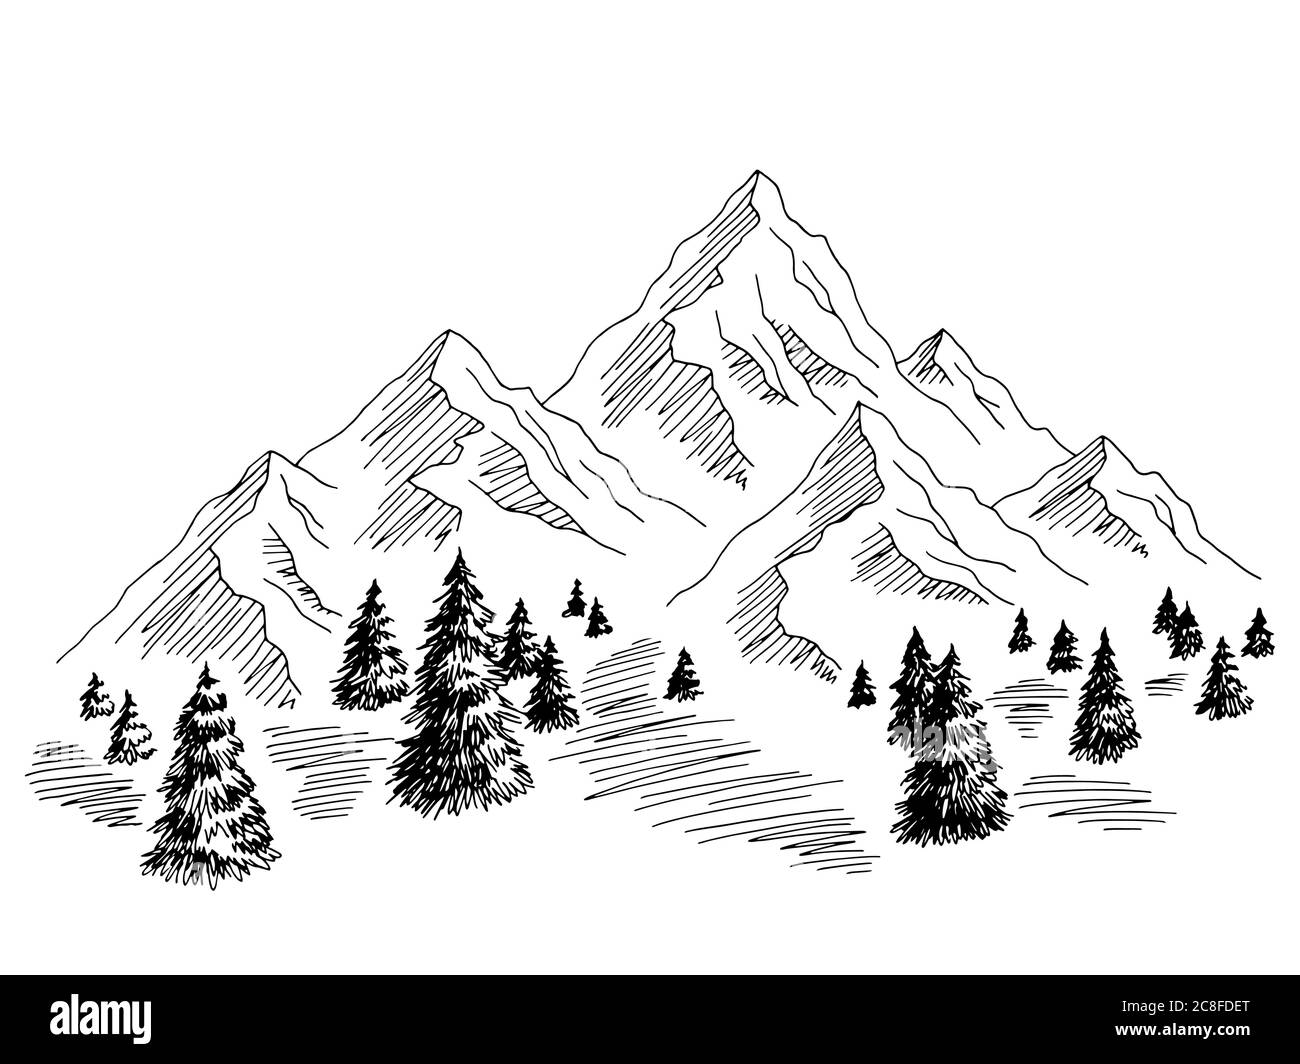 Mountains hill graphic black white landscape sketch illustration vector Stock Vector